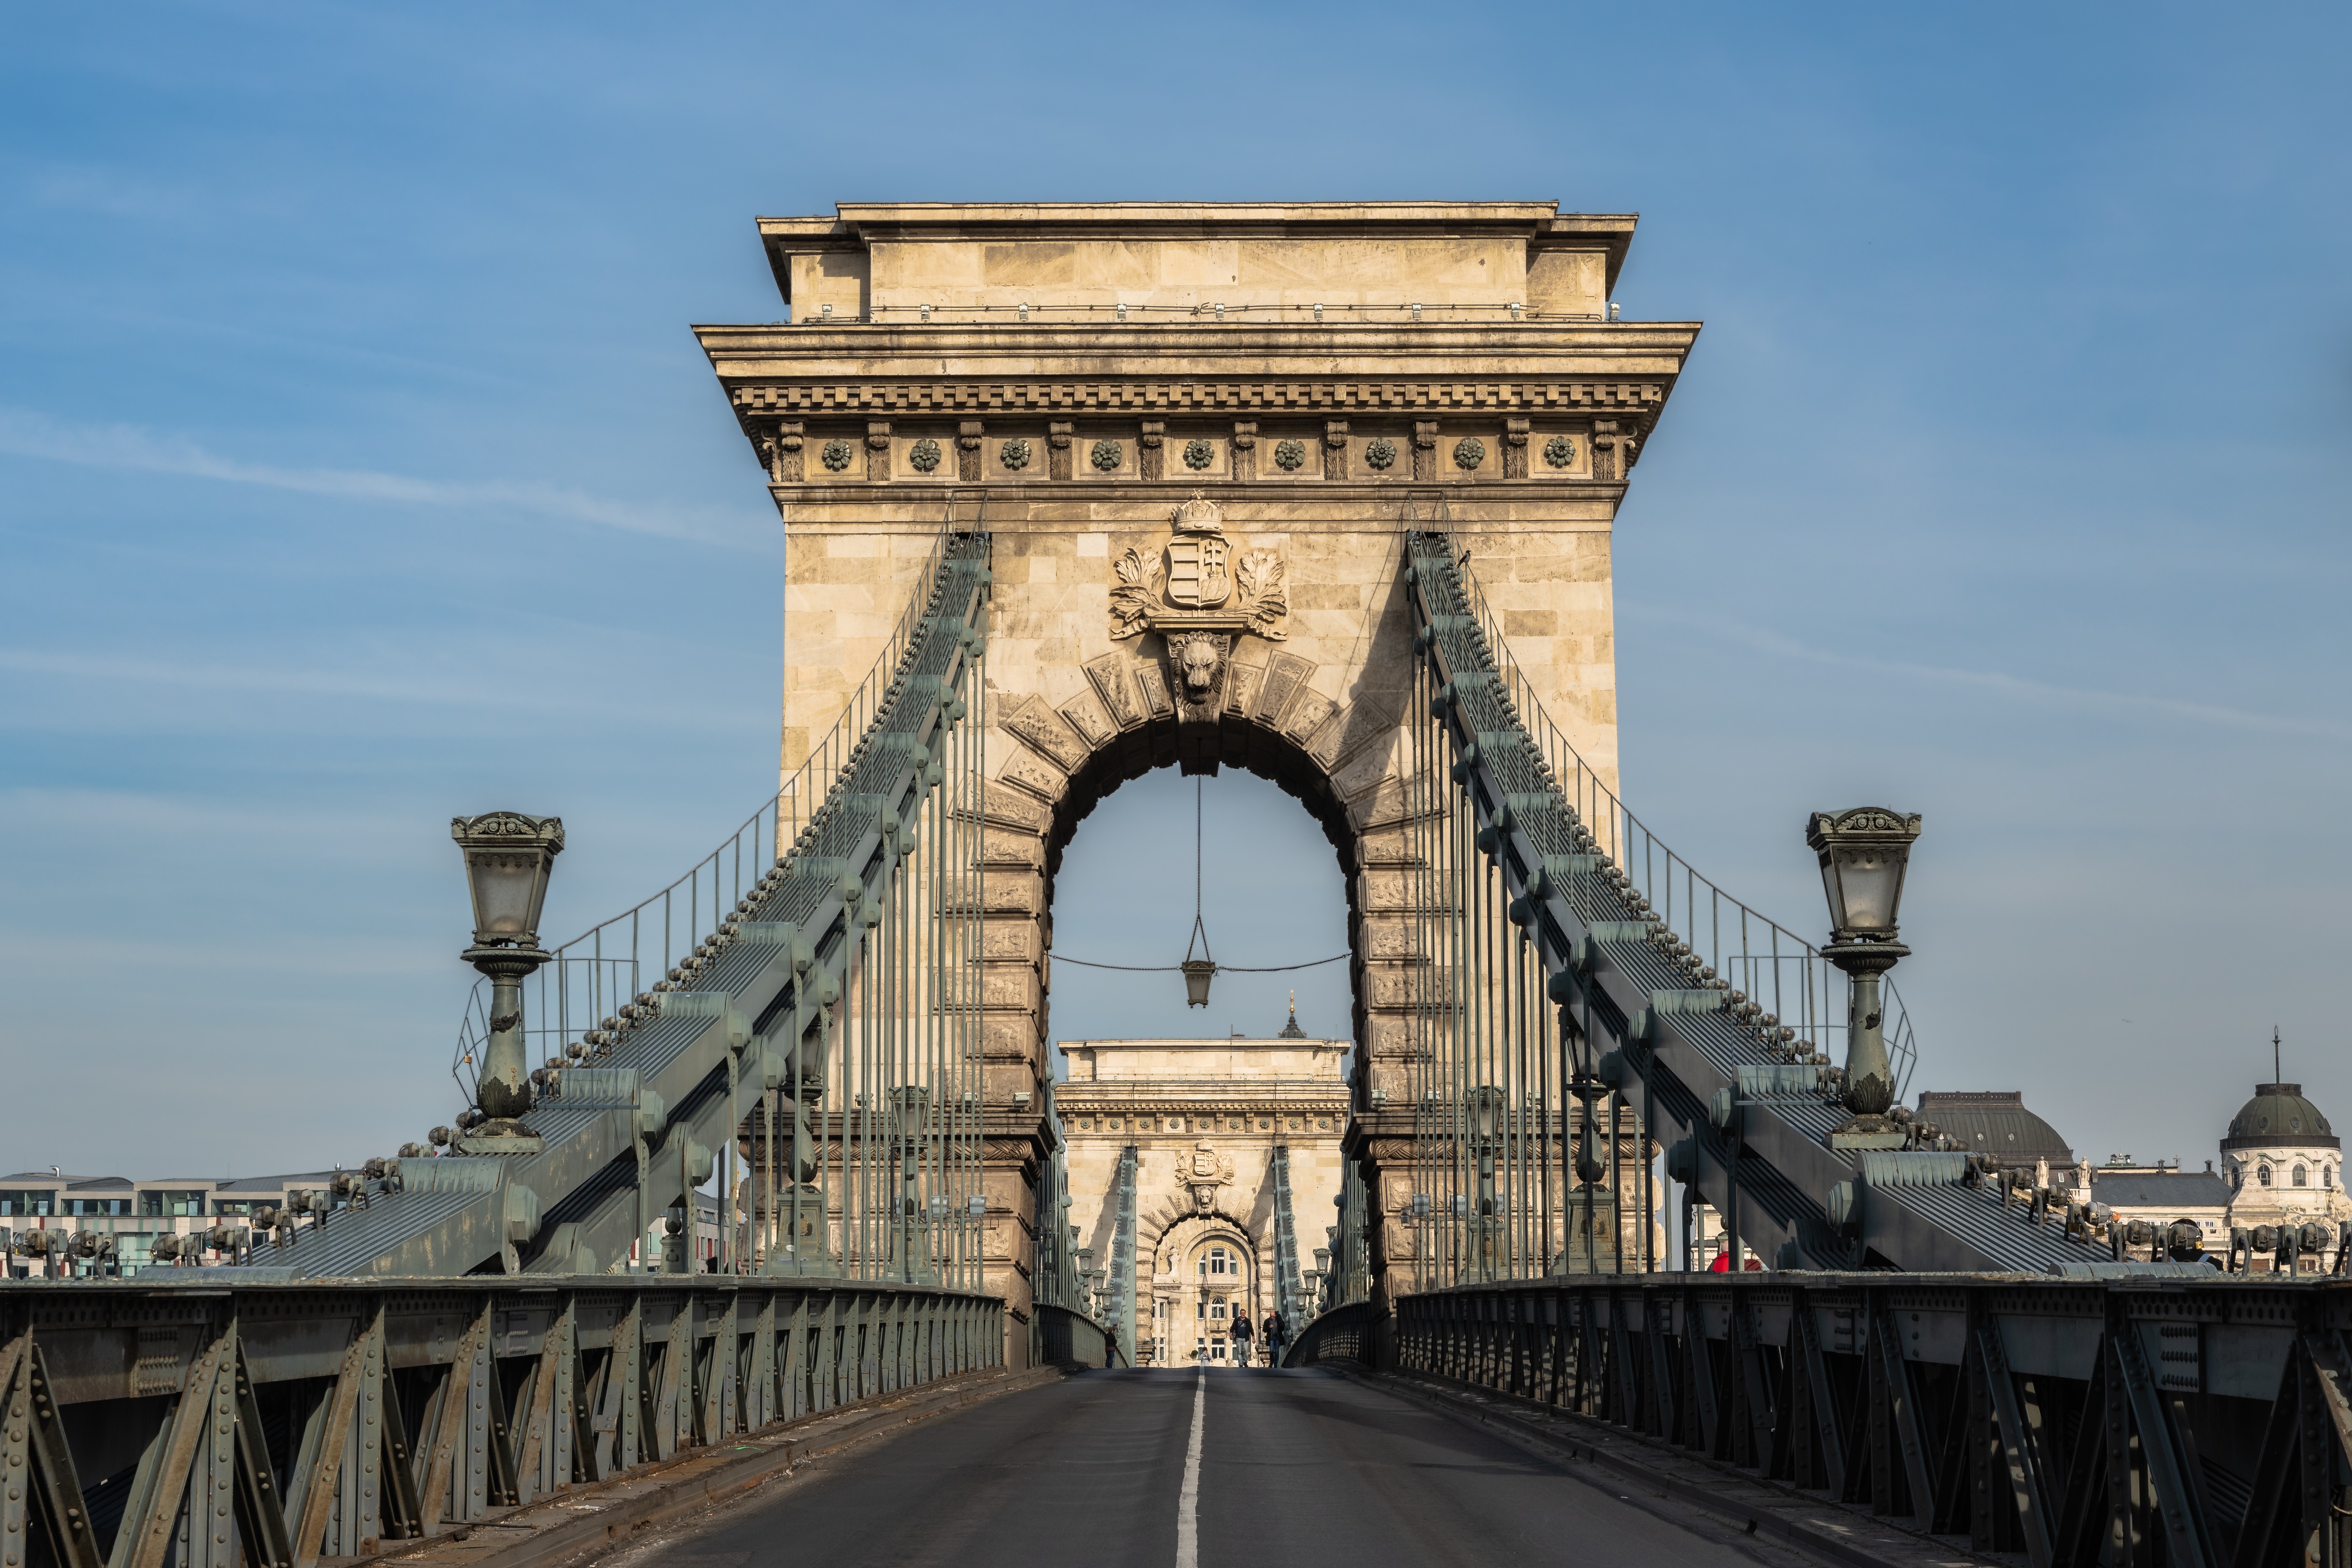 Széchenyi Chain Bridge, Suspension Bridge in Budapest, Hungary by mkf_photography